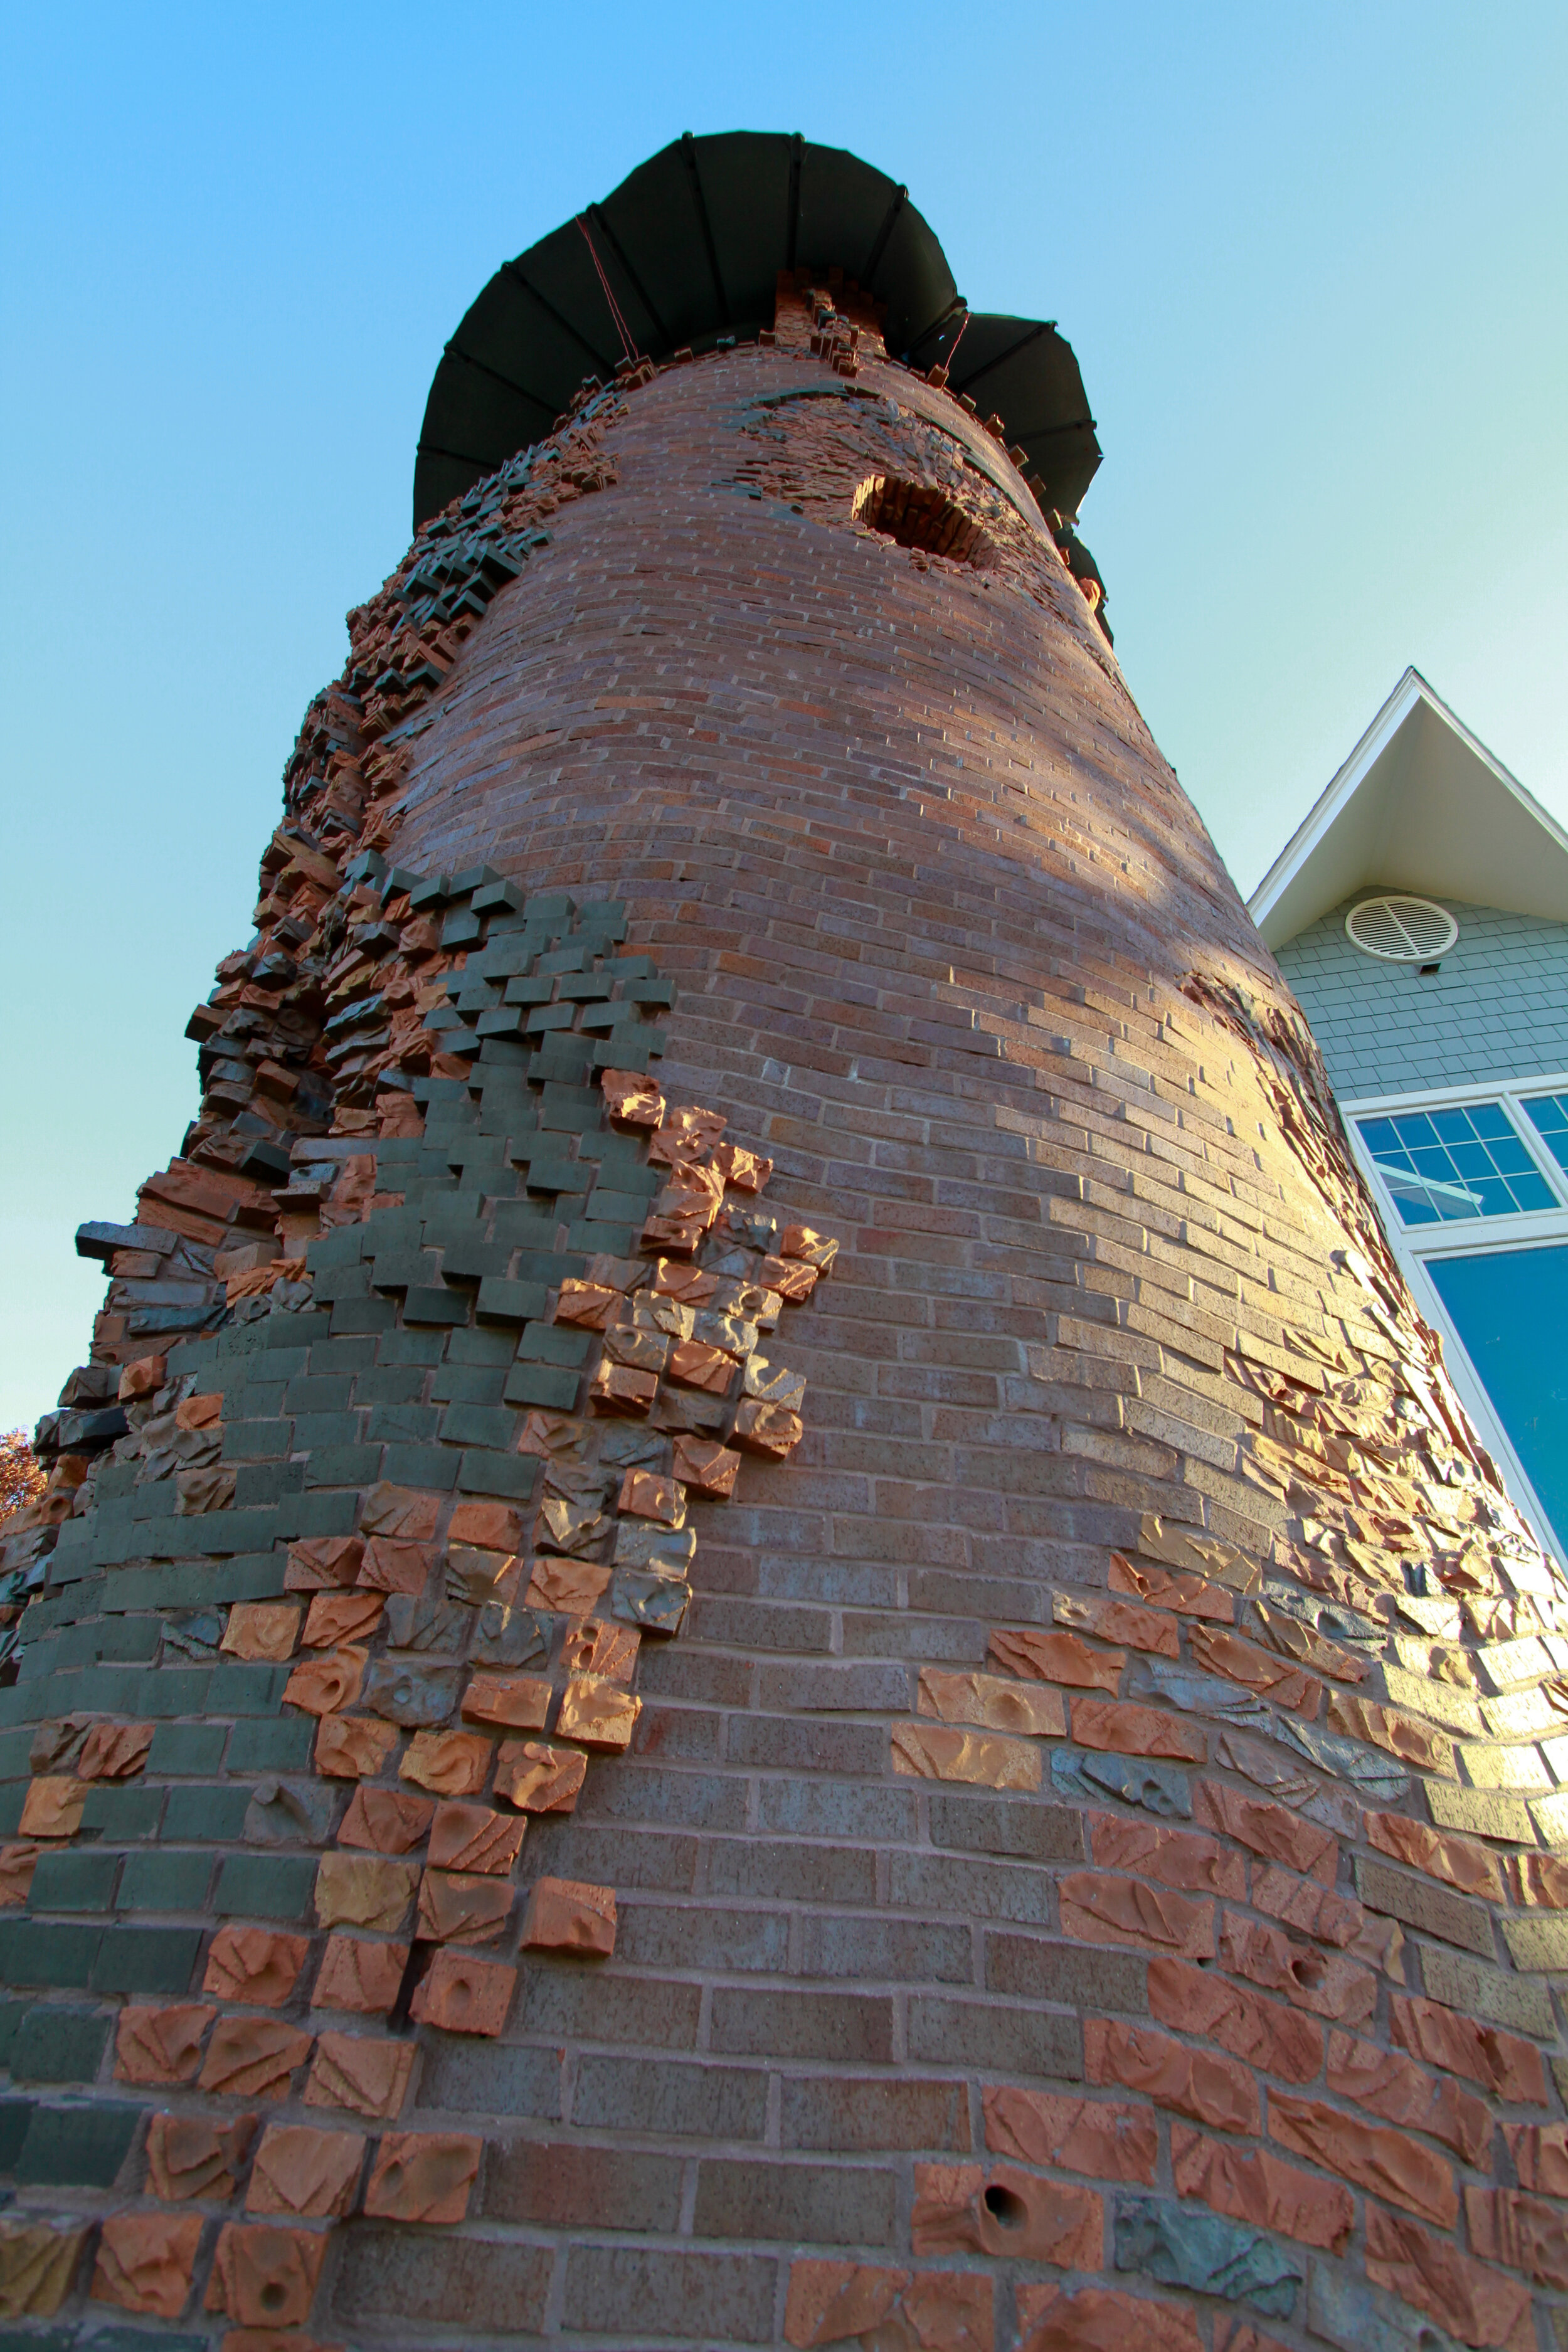 textured, carved  brickwork adorns the side of silo